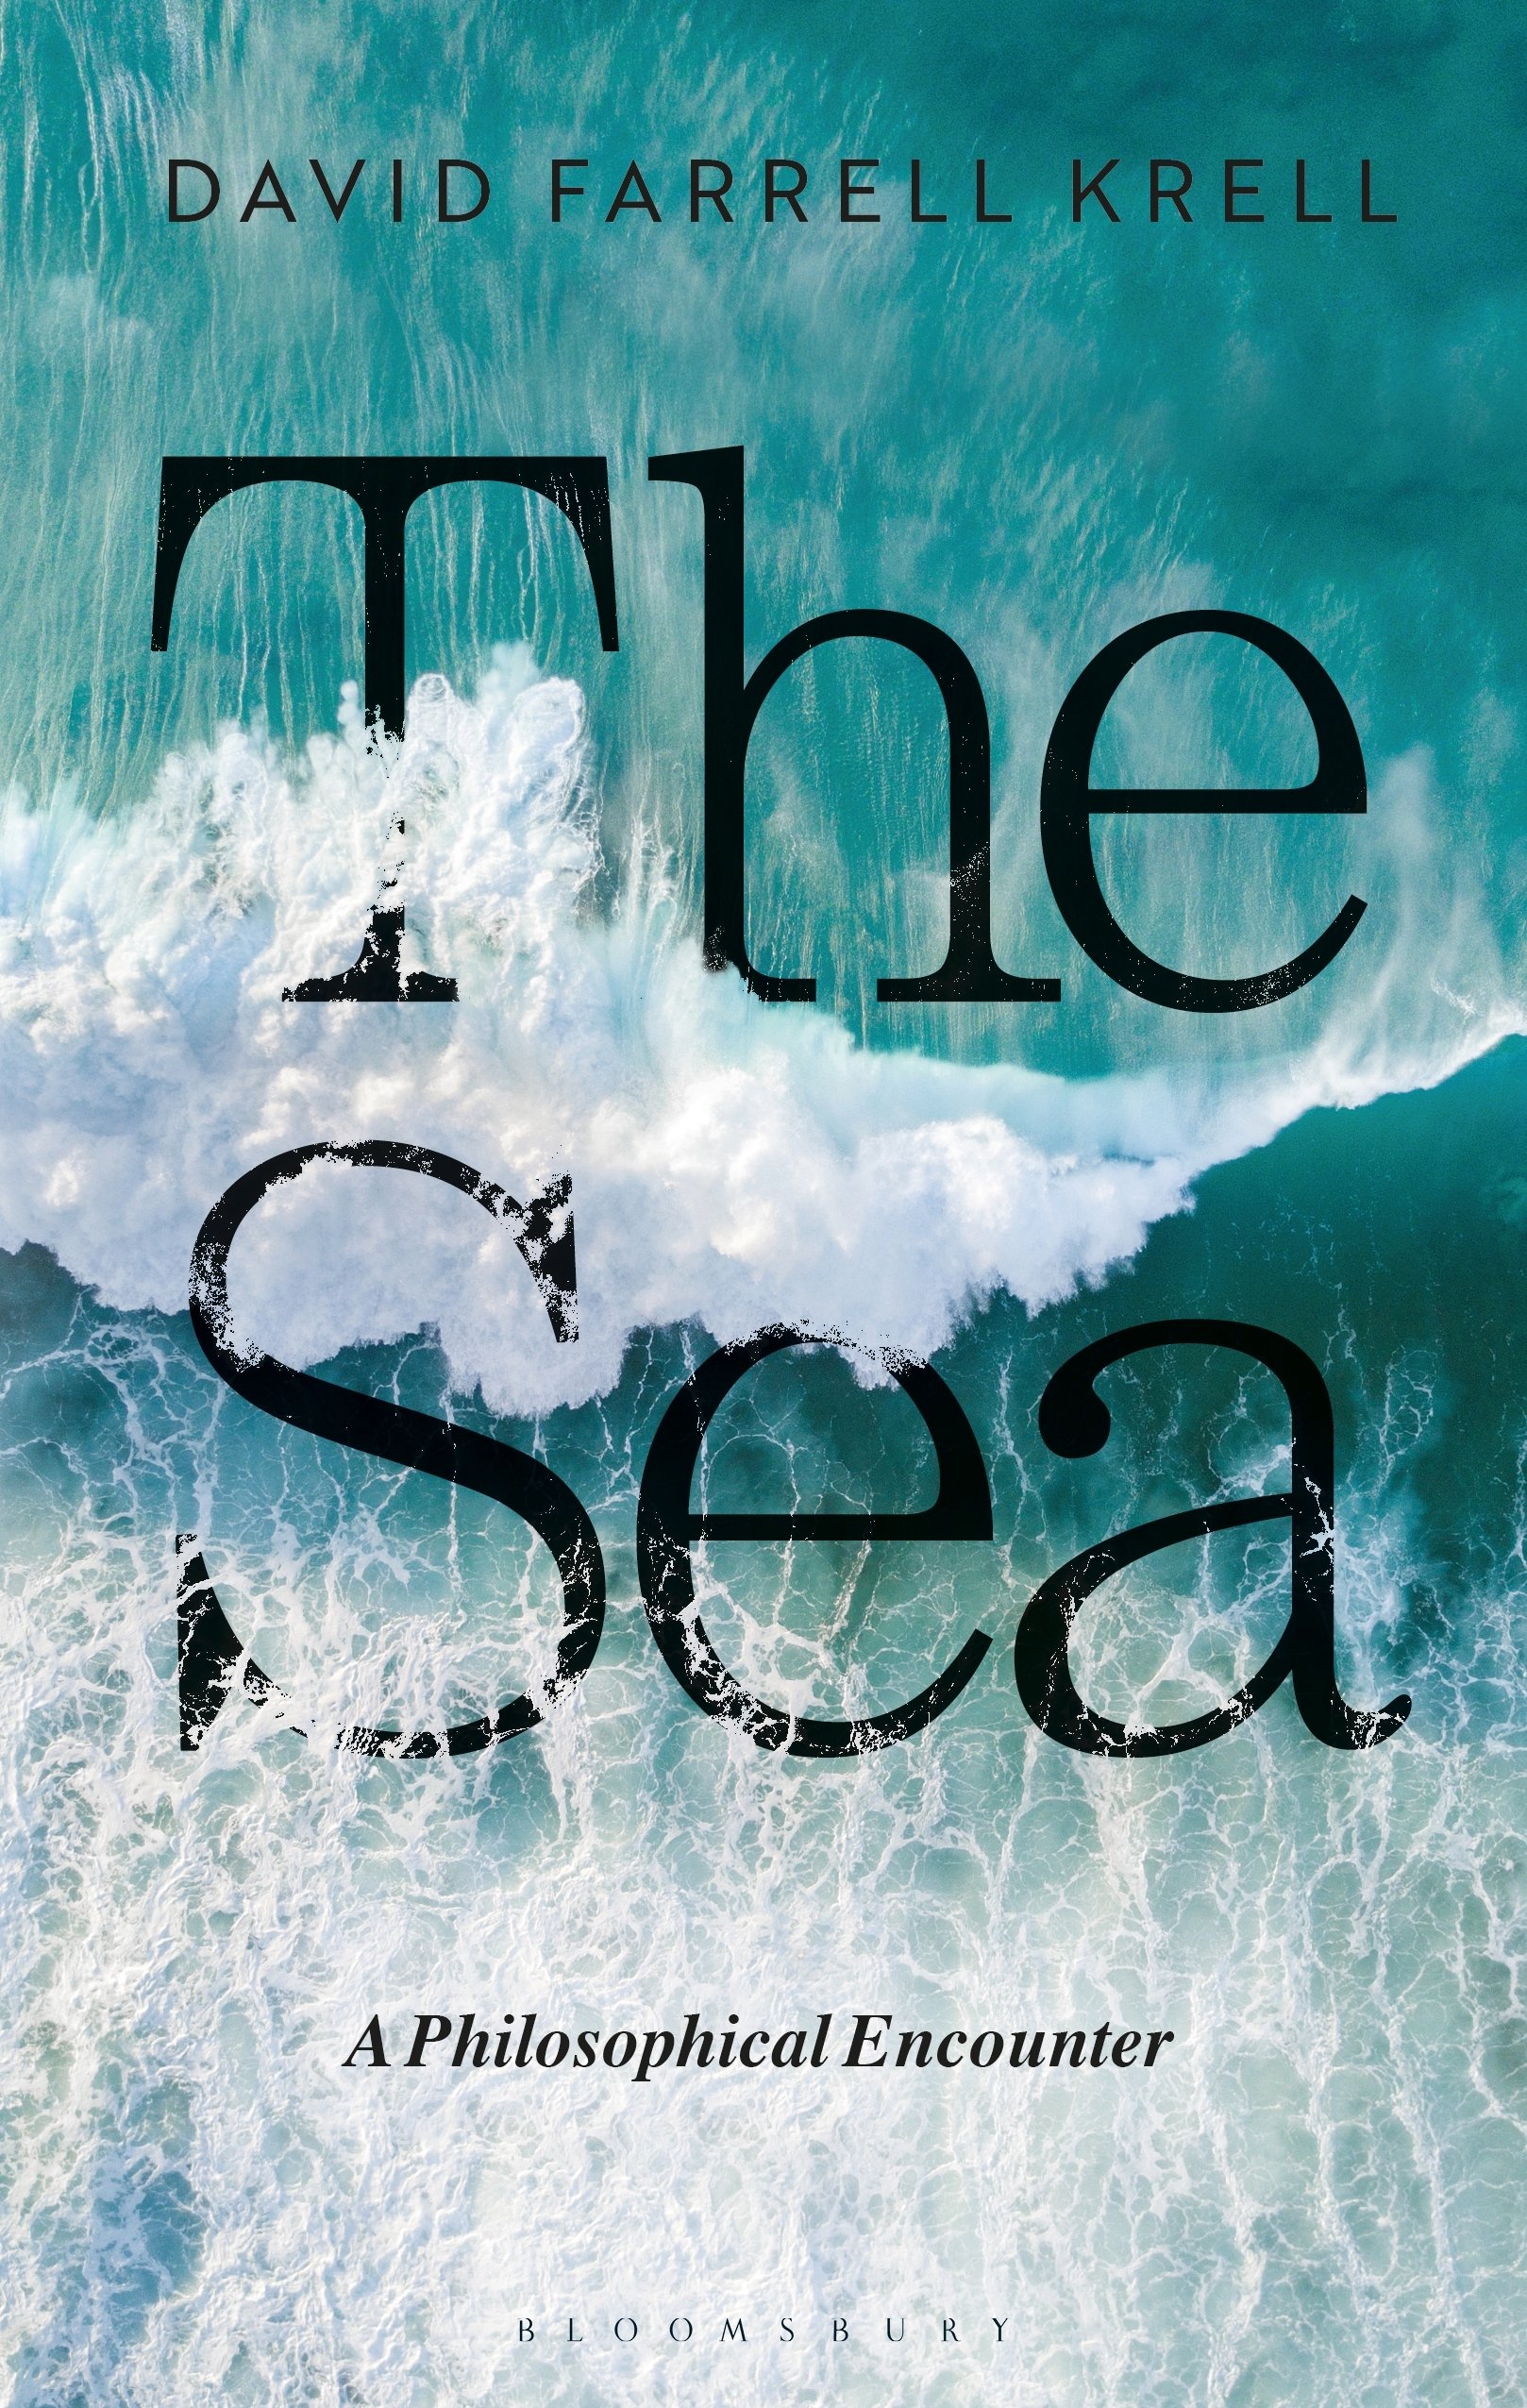 The Sea : A Philosophical Encounter | David Farrell Krell image0